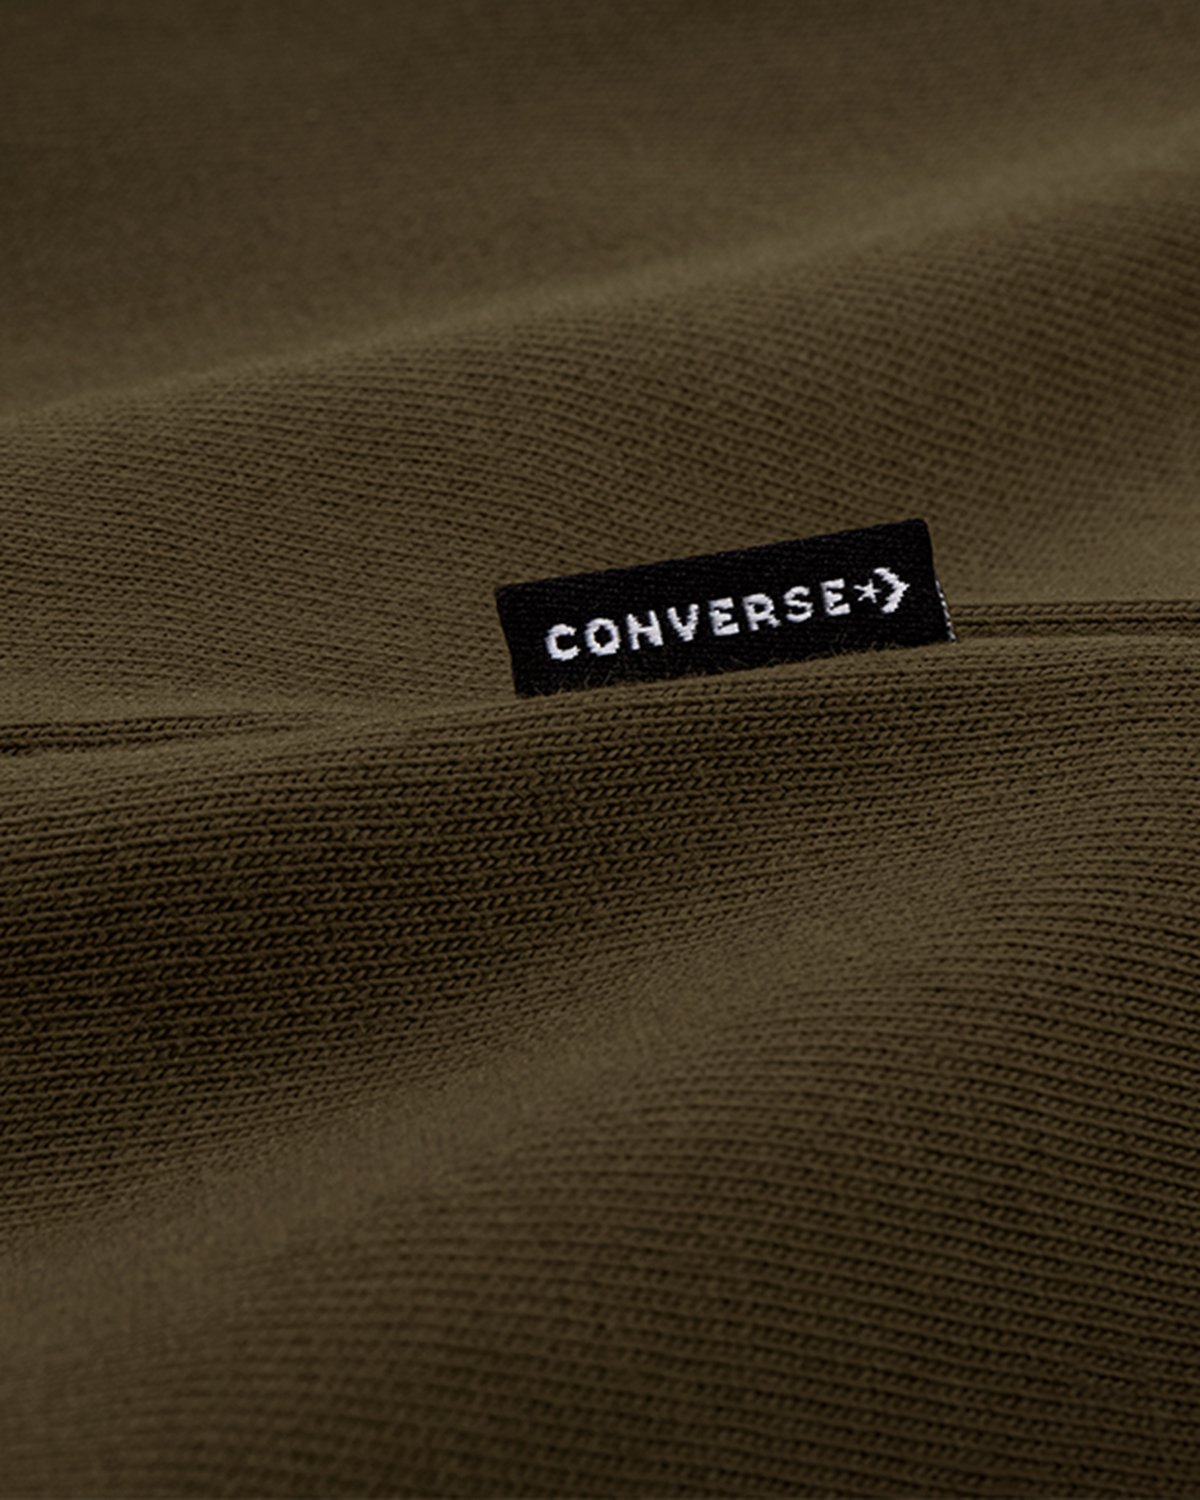 Converse x Kim Jones - T-Shirt Burnt Olive - Clothing - Green - Image 5